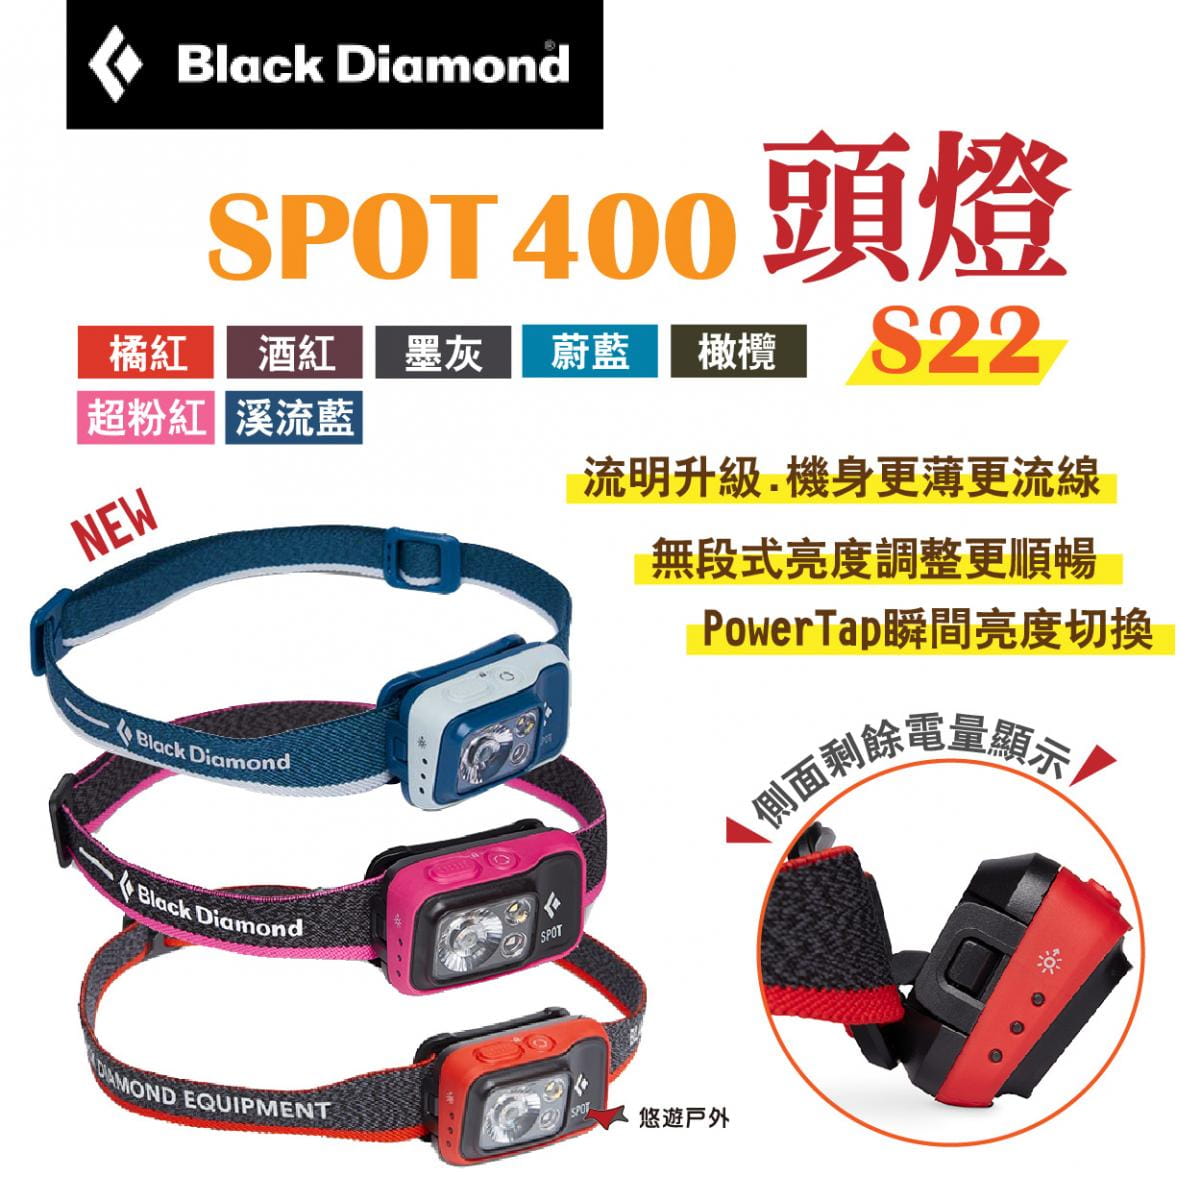 【Black Diamond】SPOT 400頭燈 S22 多色可選 悠遊戶外 1